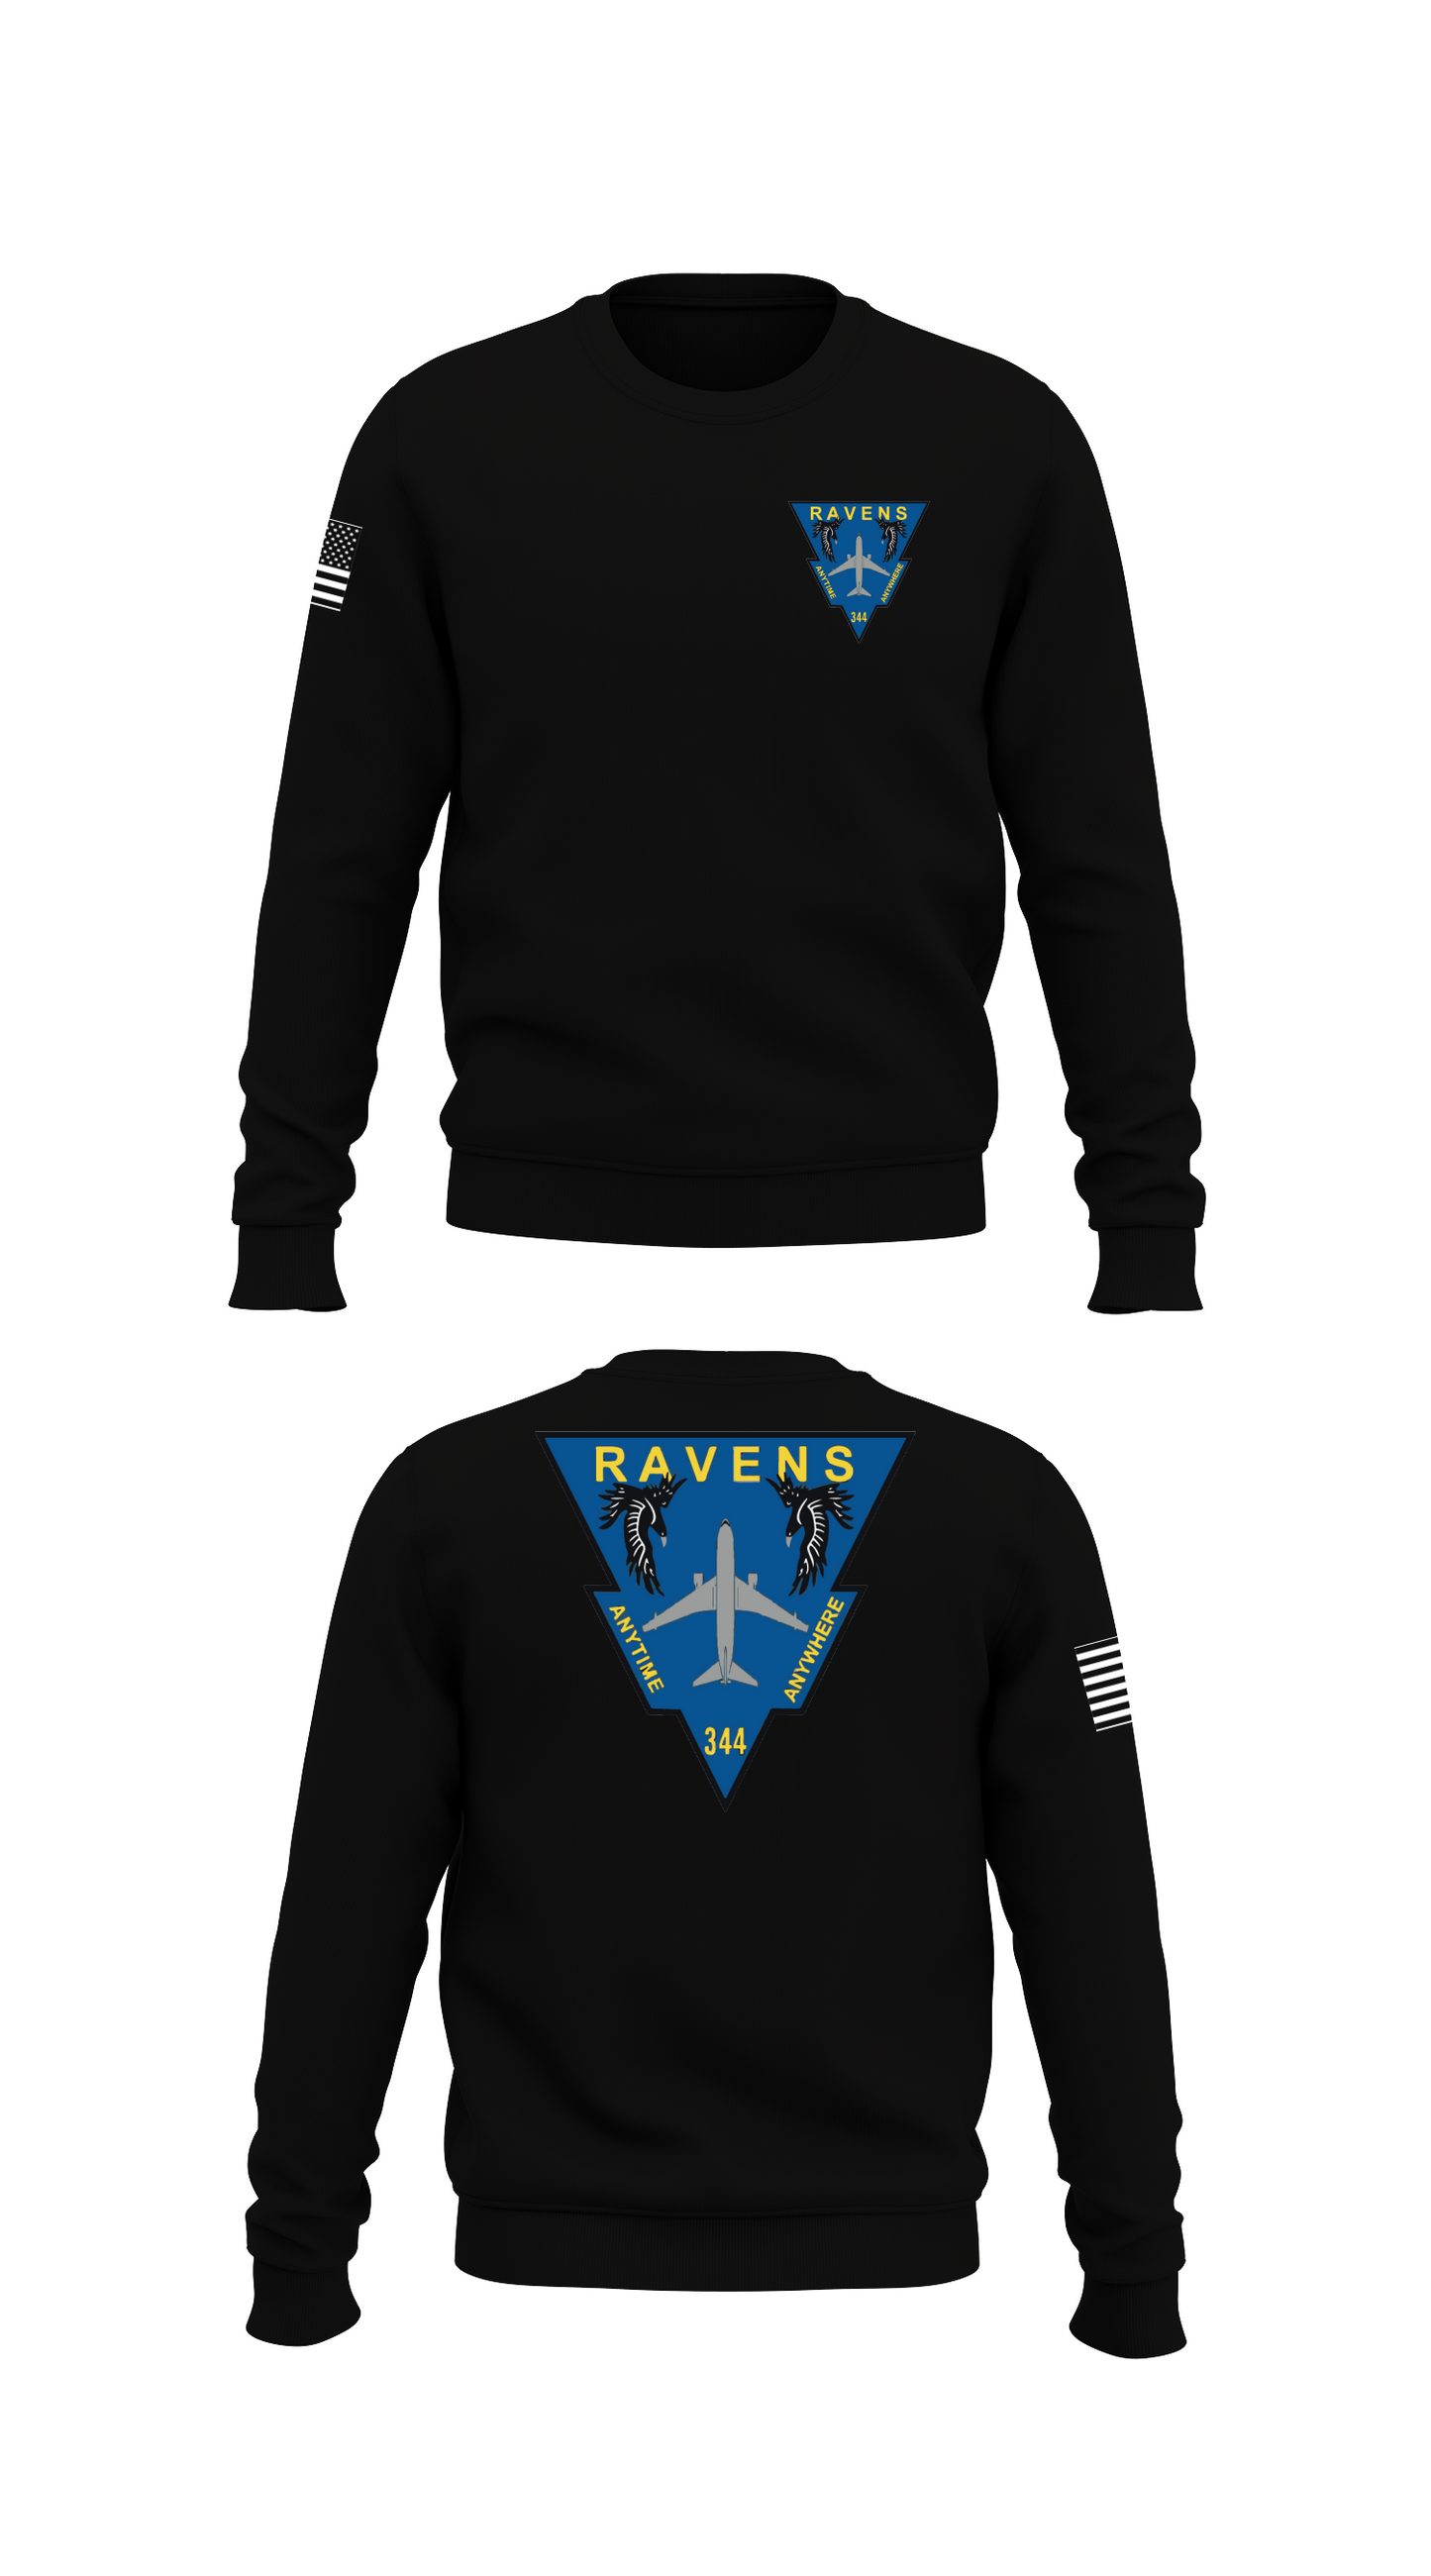 344th ARS -Ravens- Store 1 Core Men's Crewneck Performance Sweatshirt - 44137477312